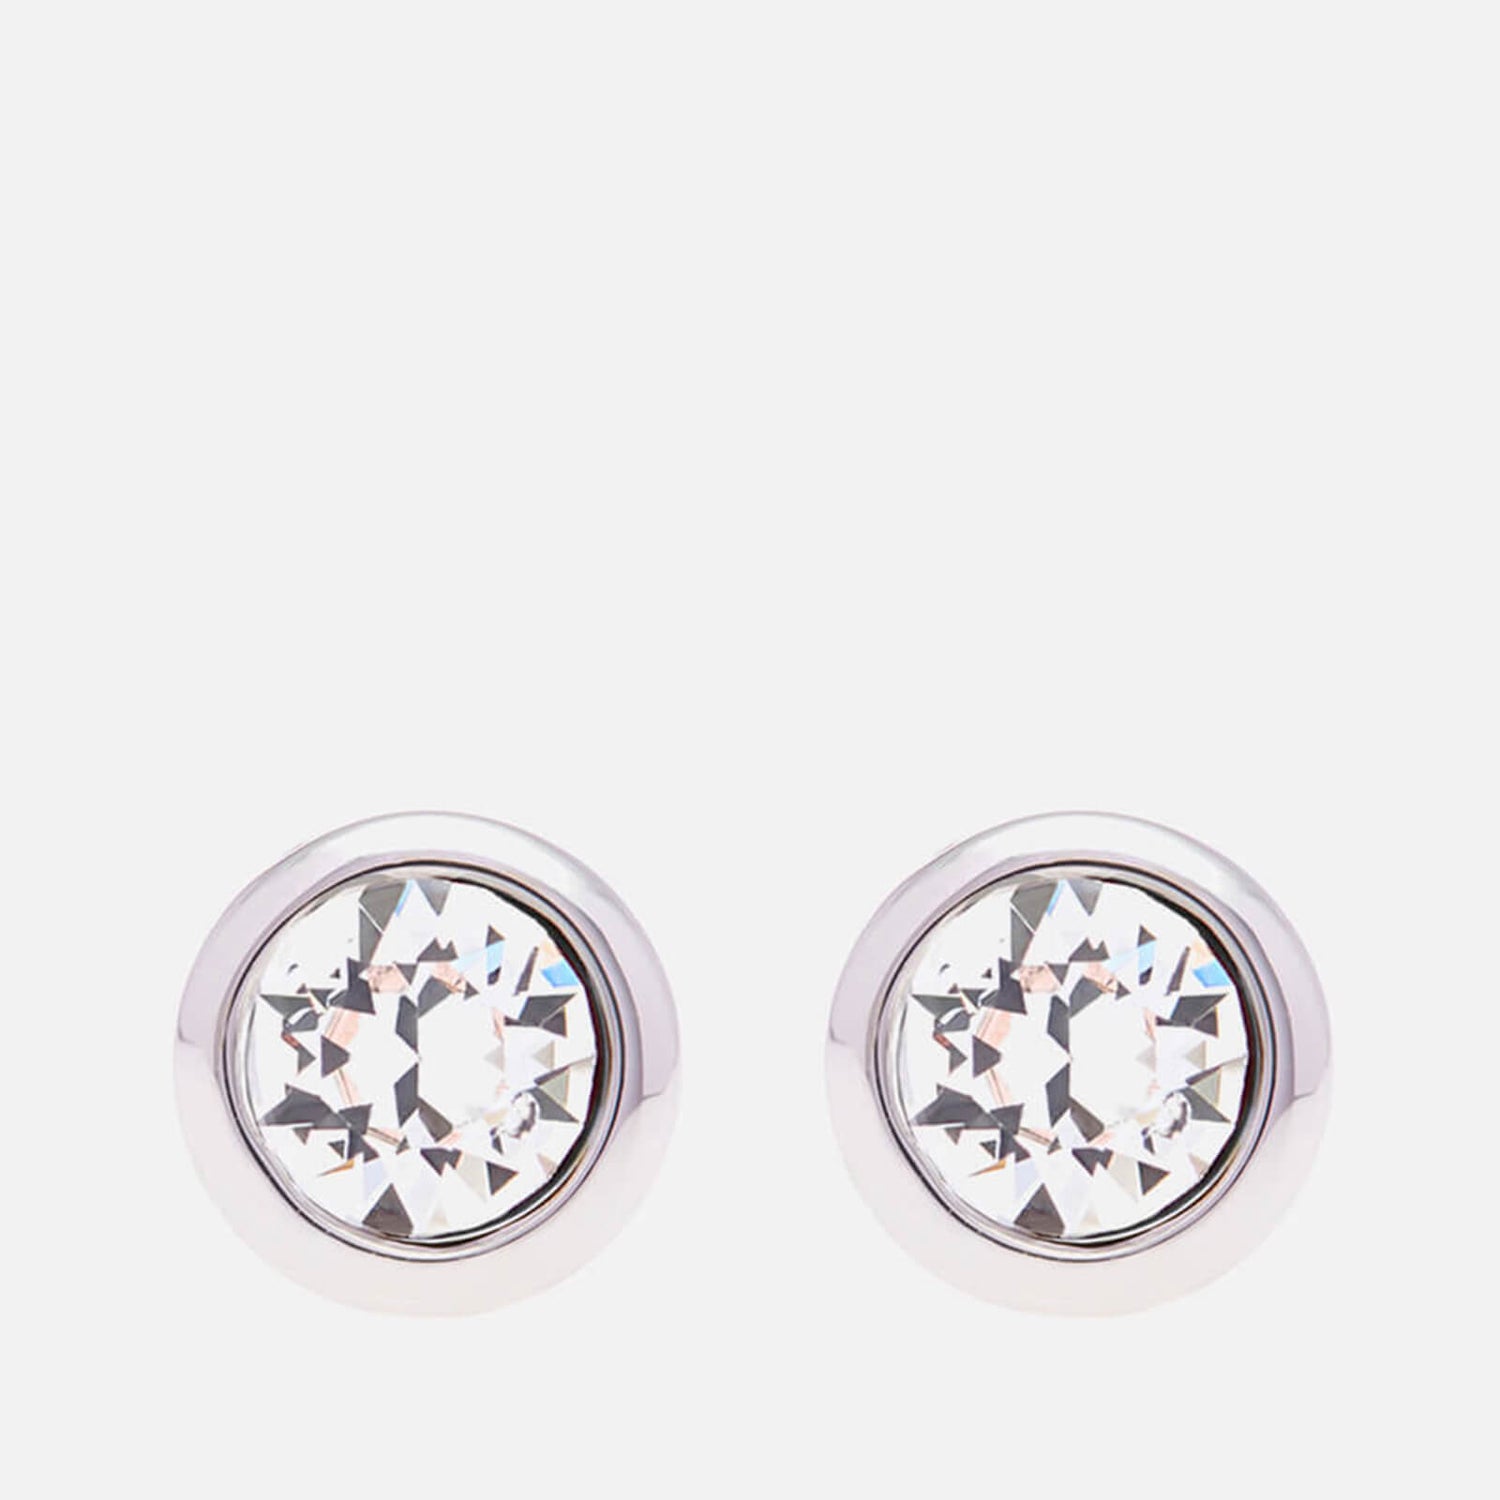 Ted Baker Women's Sinaa Crystal Stud Earrings - Silver/Crystal